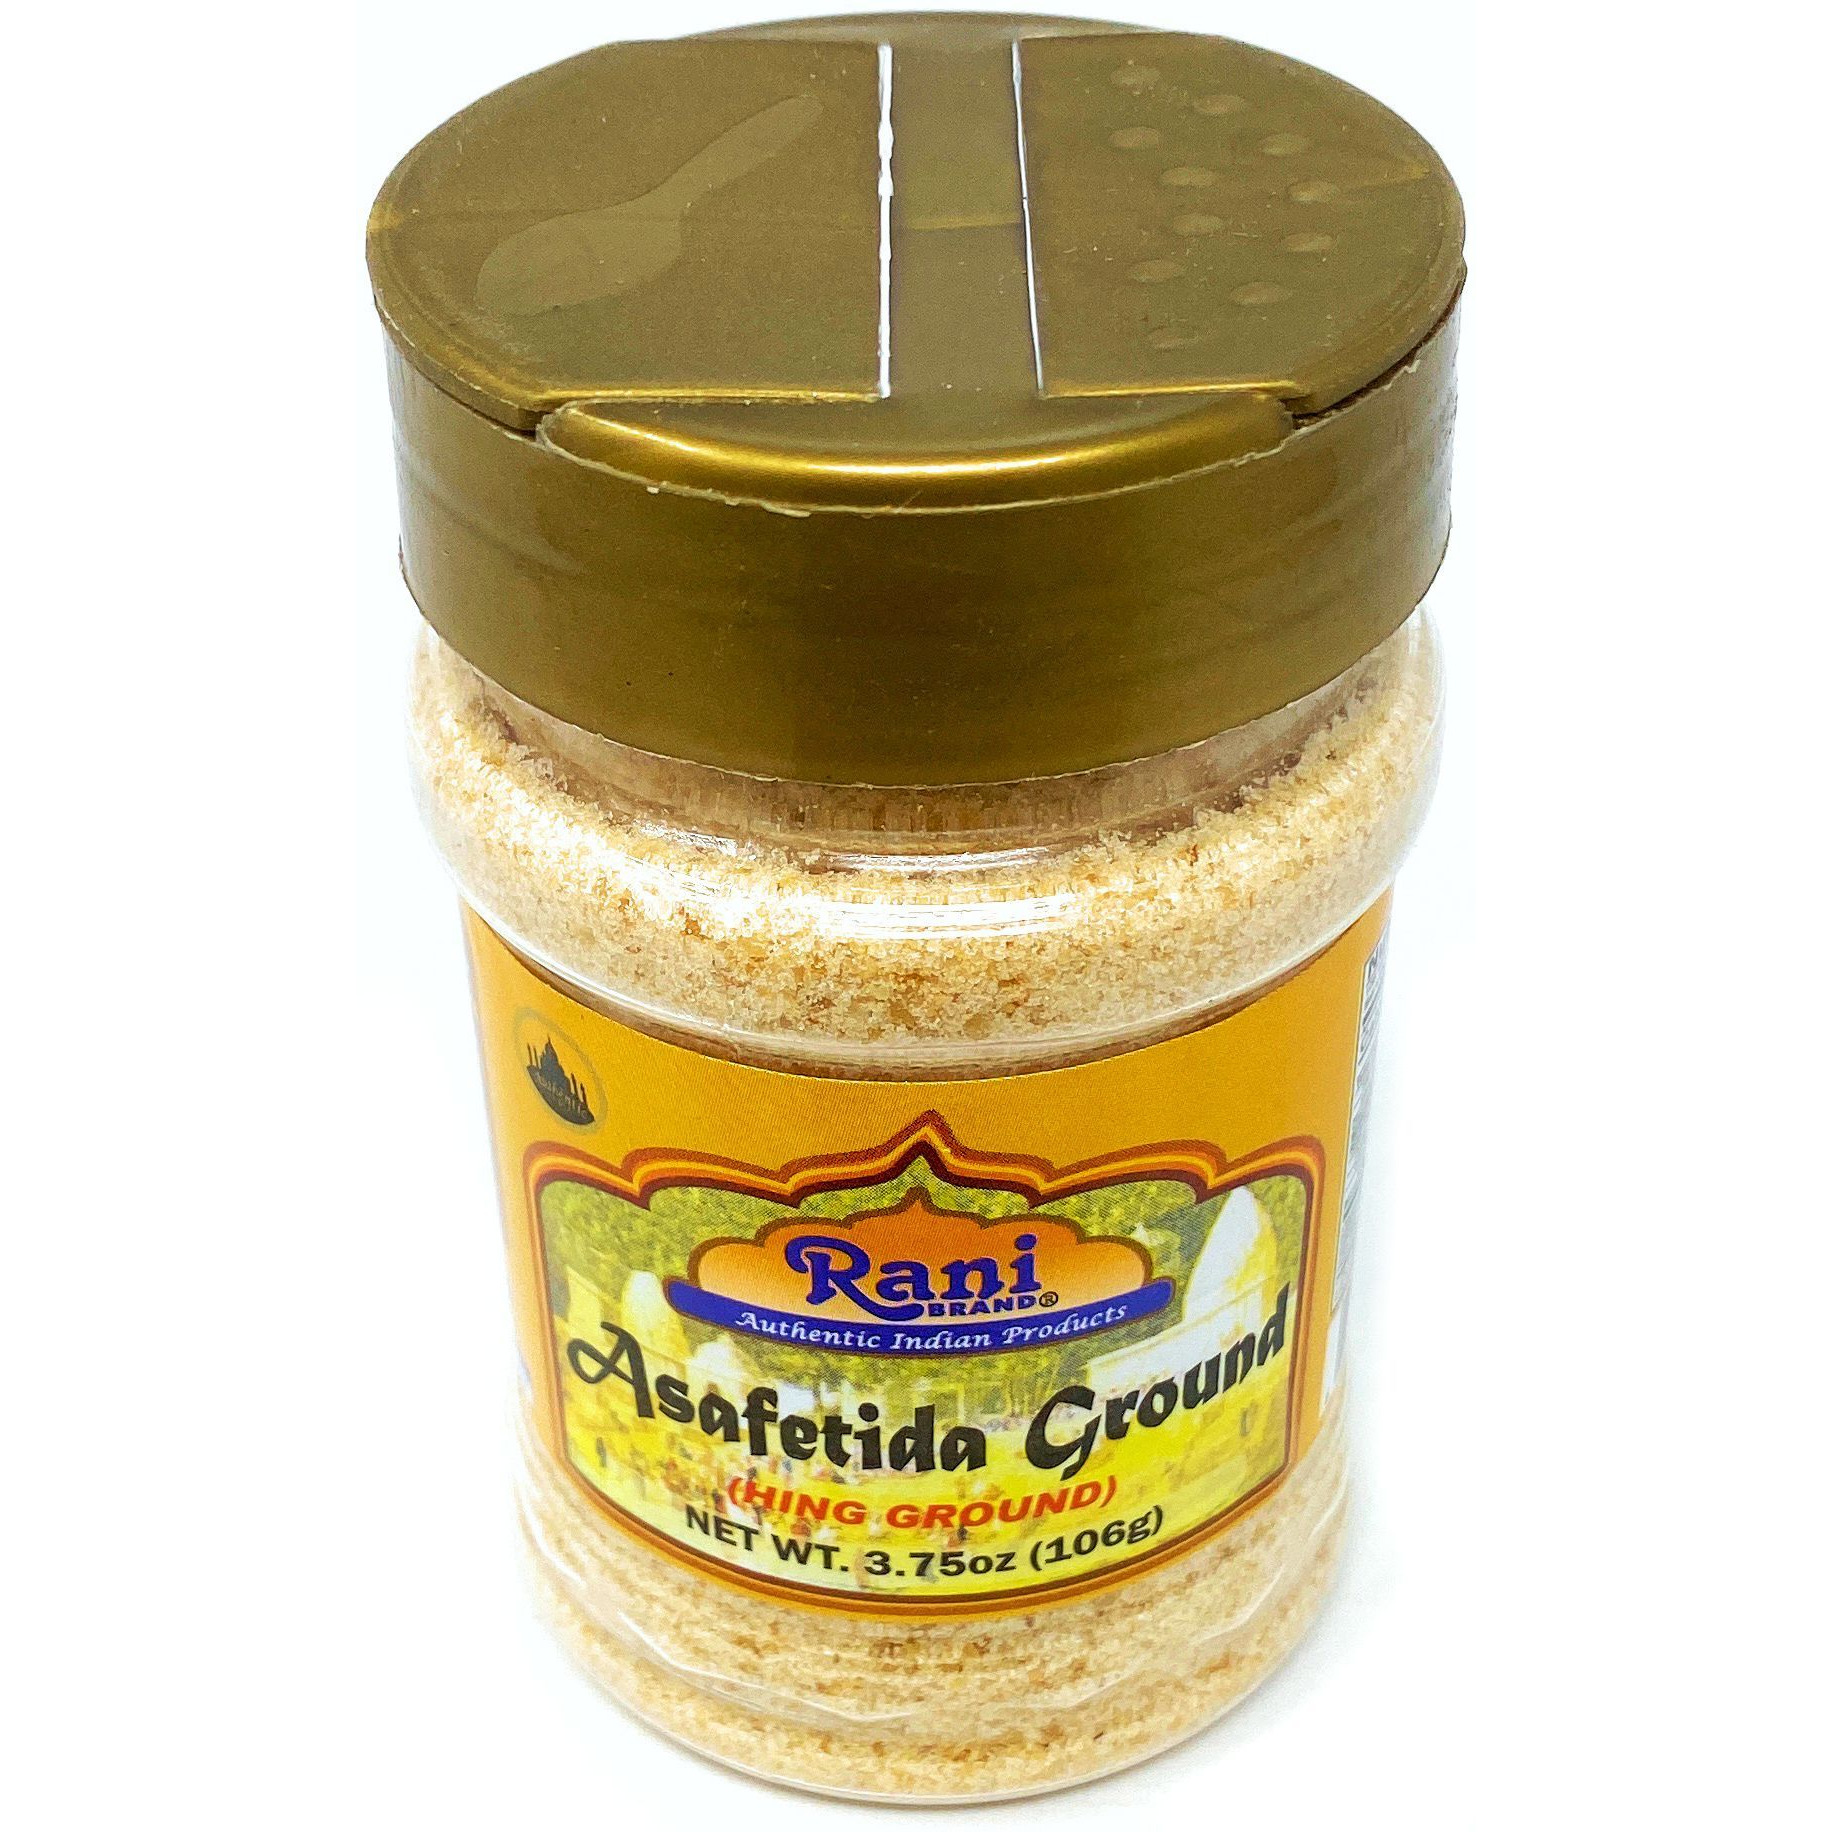 Rani Asafetida (Hing) Ground 3.75oz (106g) ~ All Natural | Salt Free | Vegan | NON-GMO | Asafoetida Indian Spice | Best for Onion Garlic Substitute